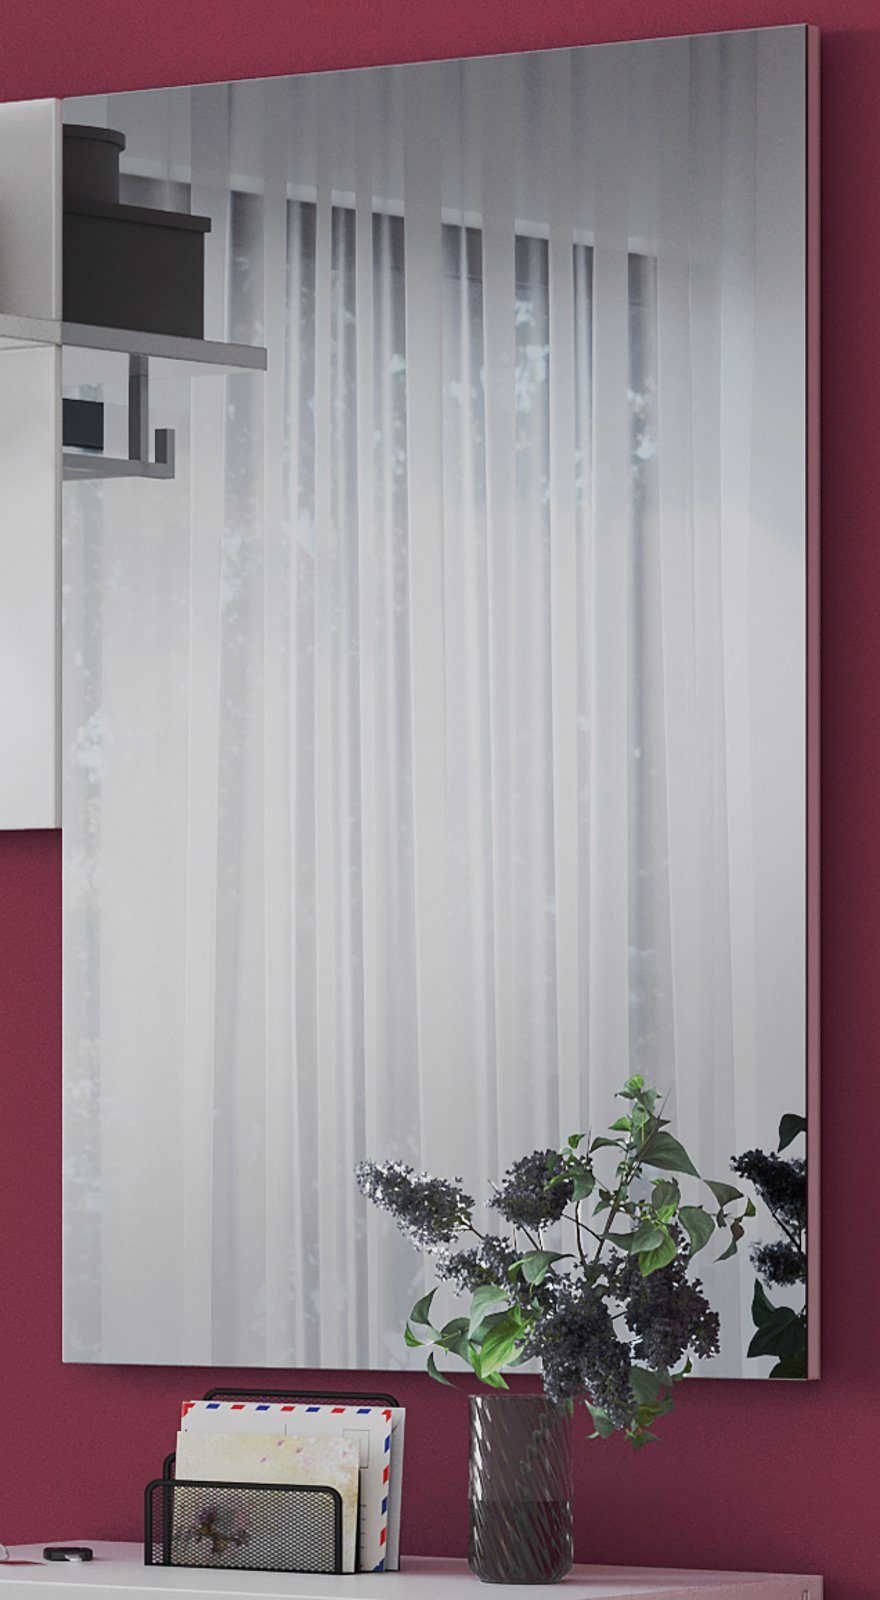 x (Garderobenspiegel weiß, 85 Linus cm) xonox.home Wandspiegel 55